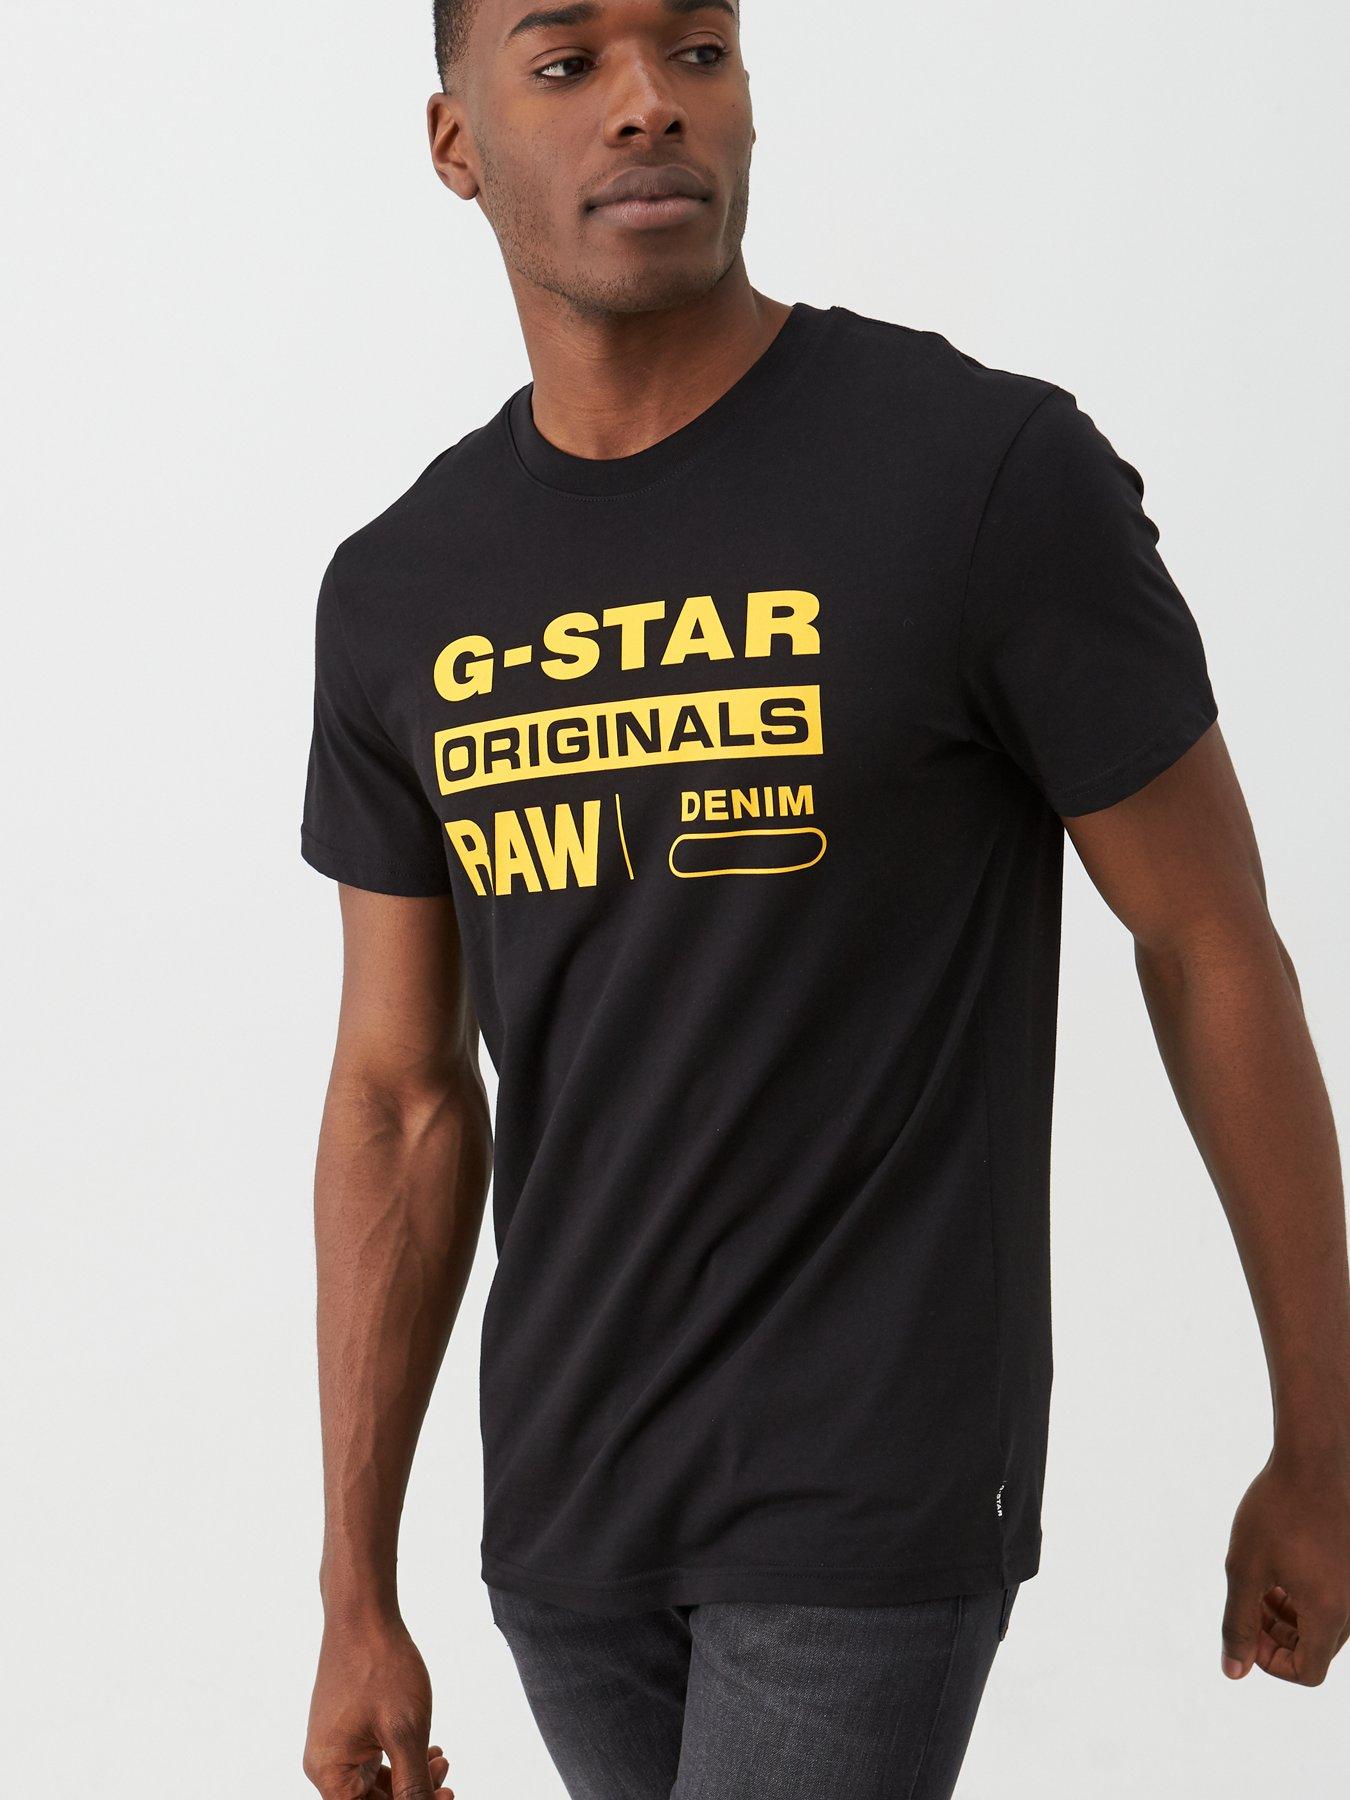 mens g star shirts